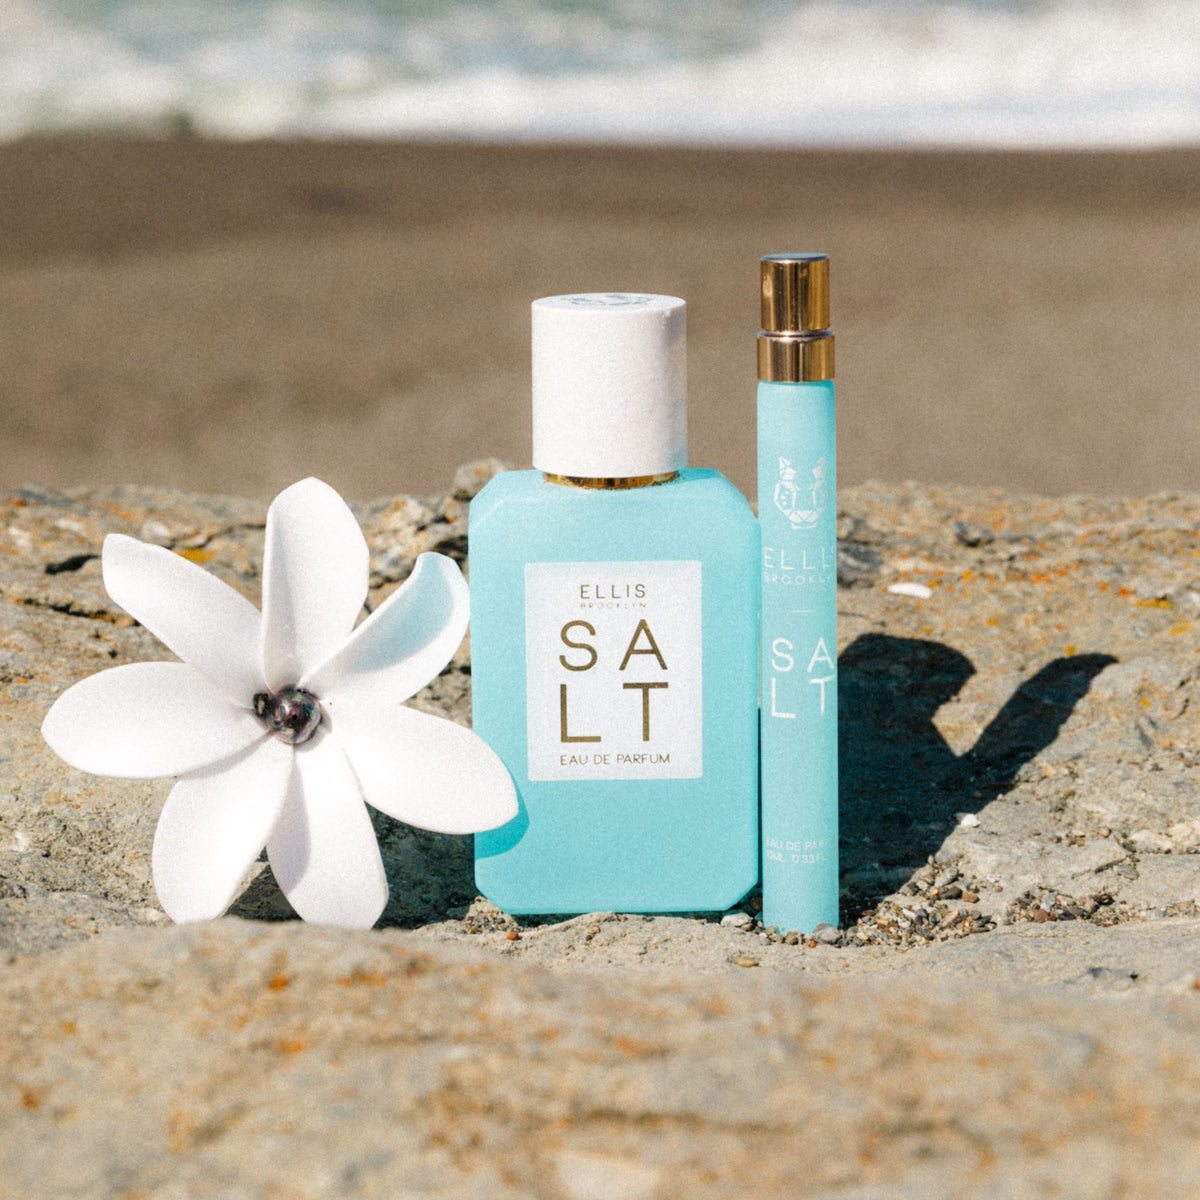 SALT 50ml & travel spray at beach 